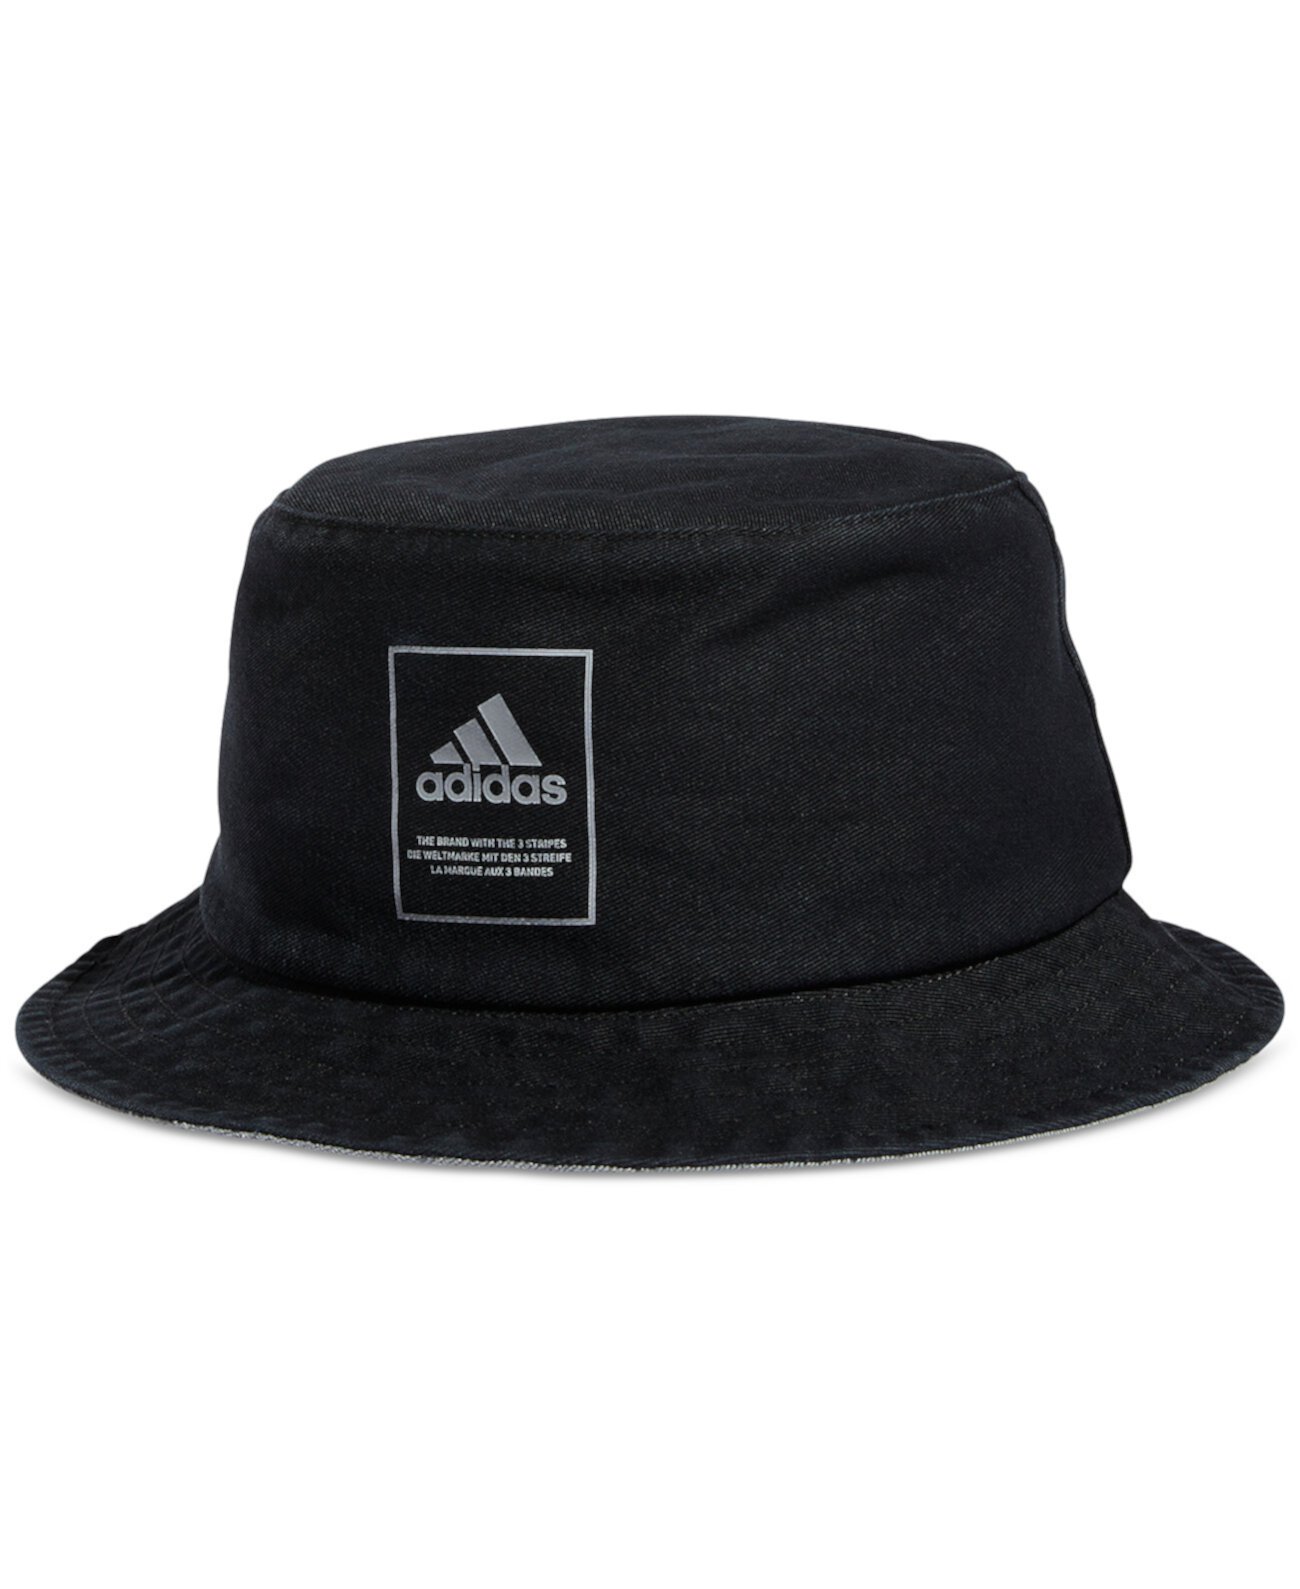 Мужская спортивная шляпа-ведро Adidas